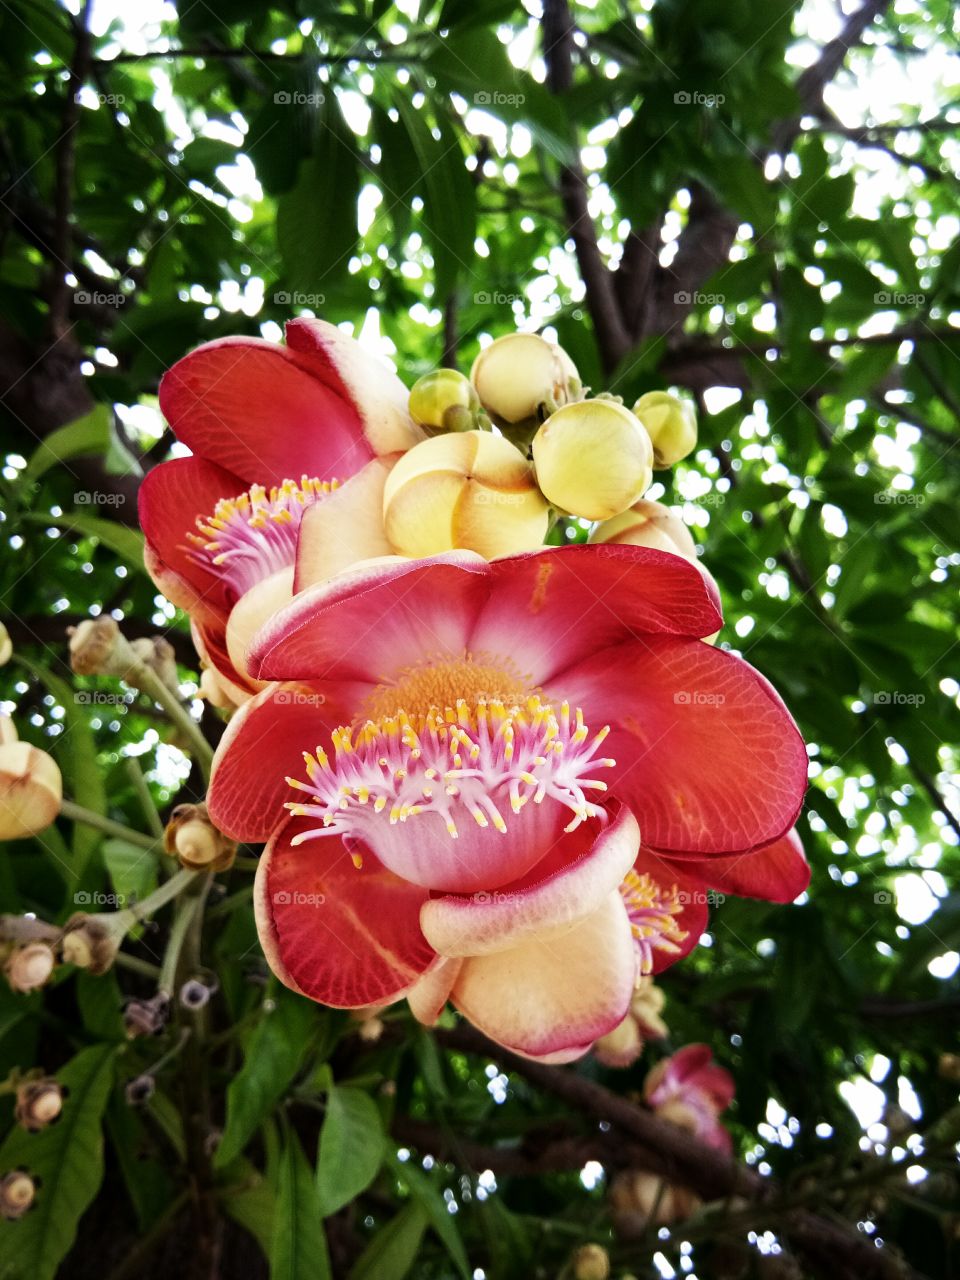 sale tree
flower